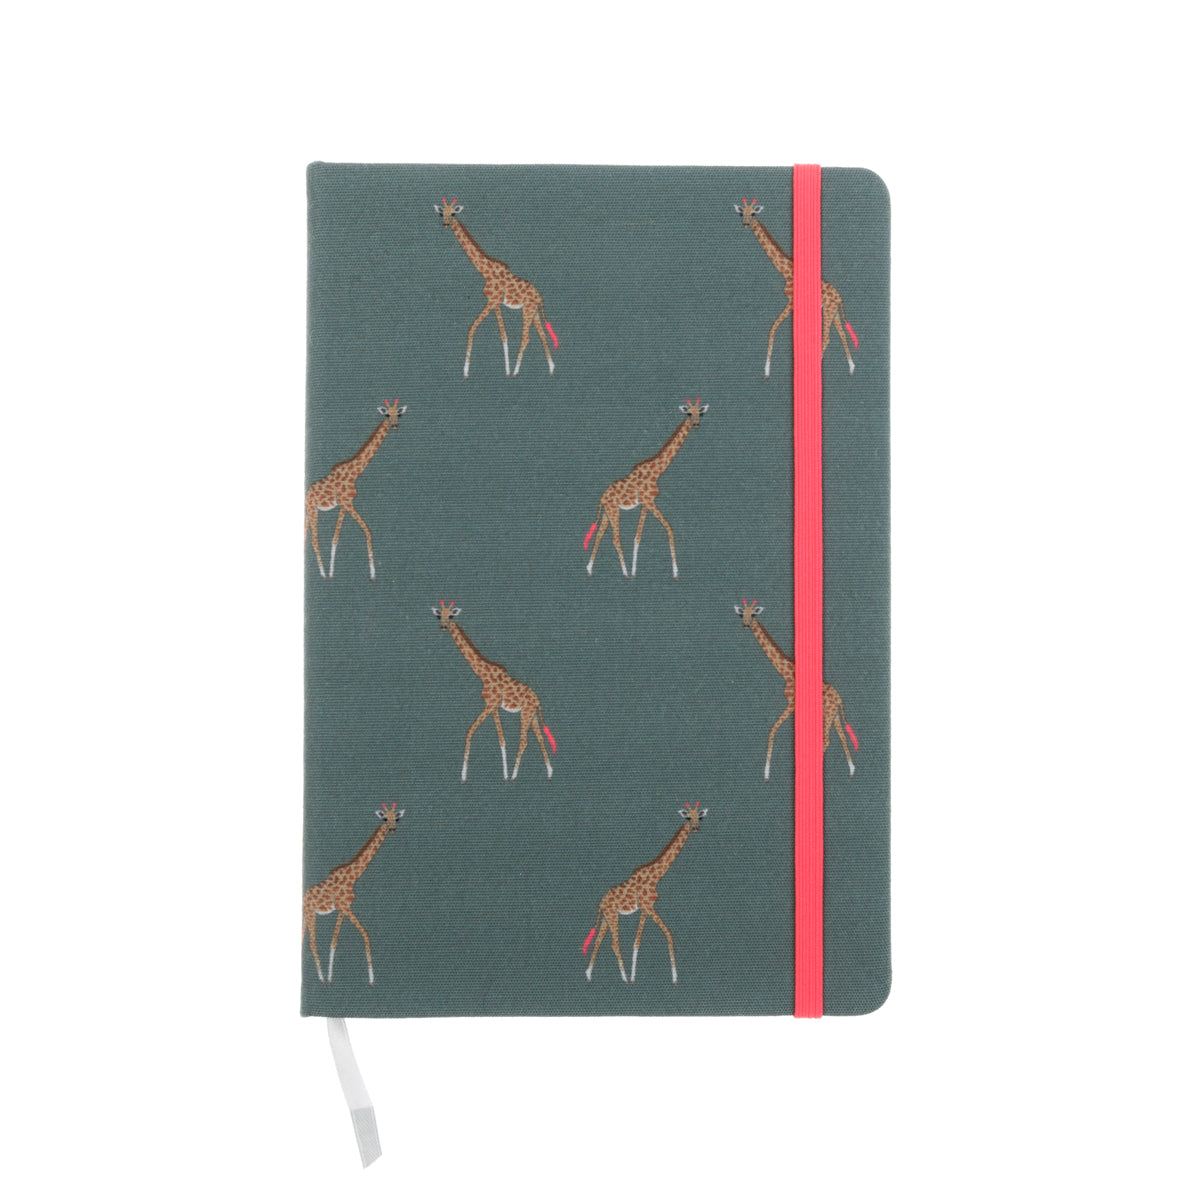 Giraffe Notebook by Sophie Allport